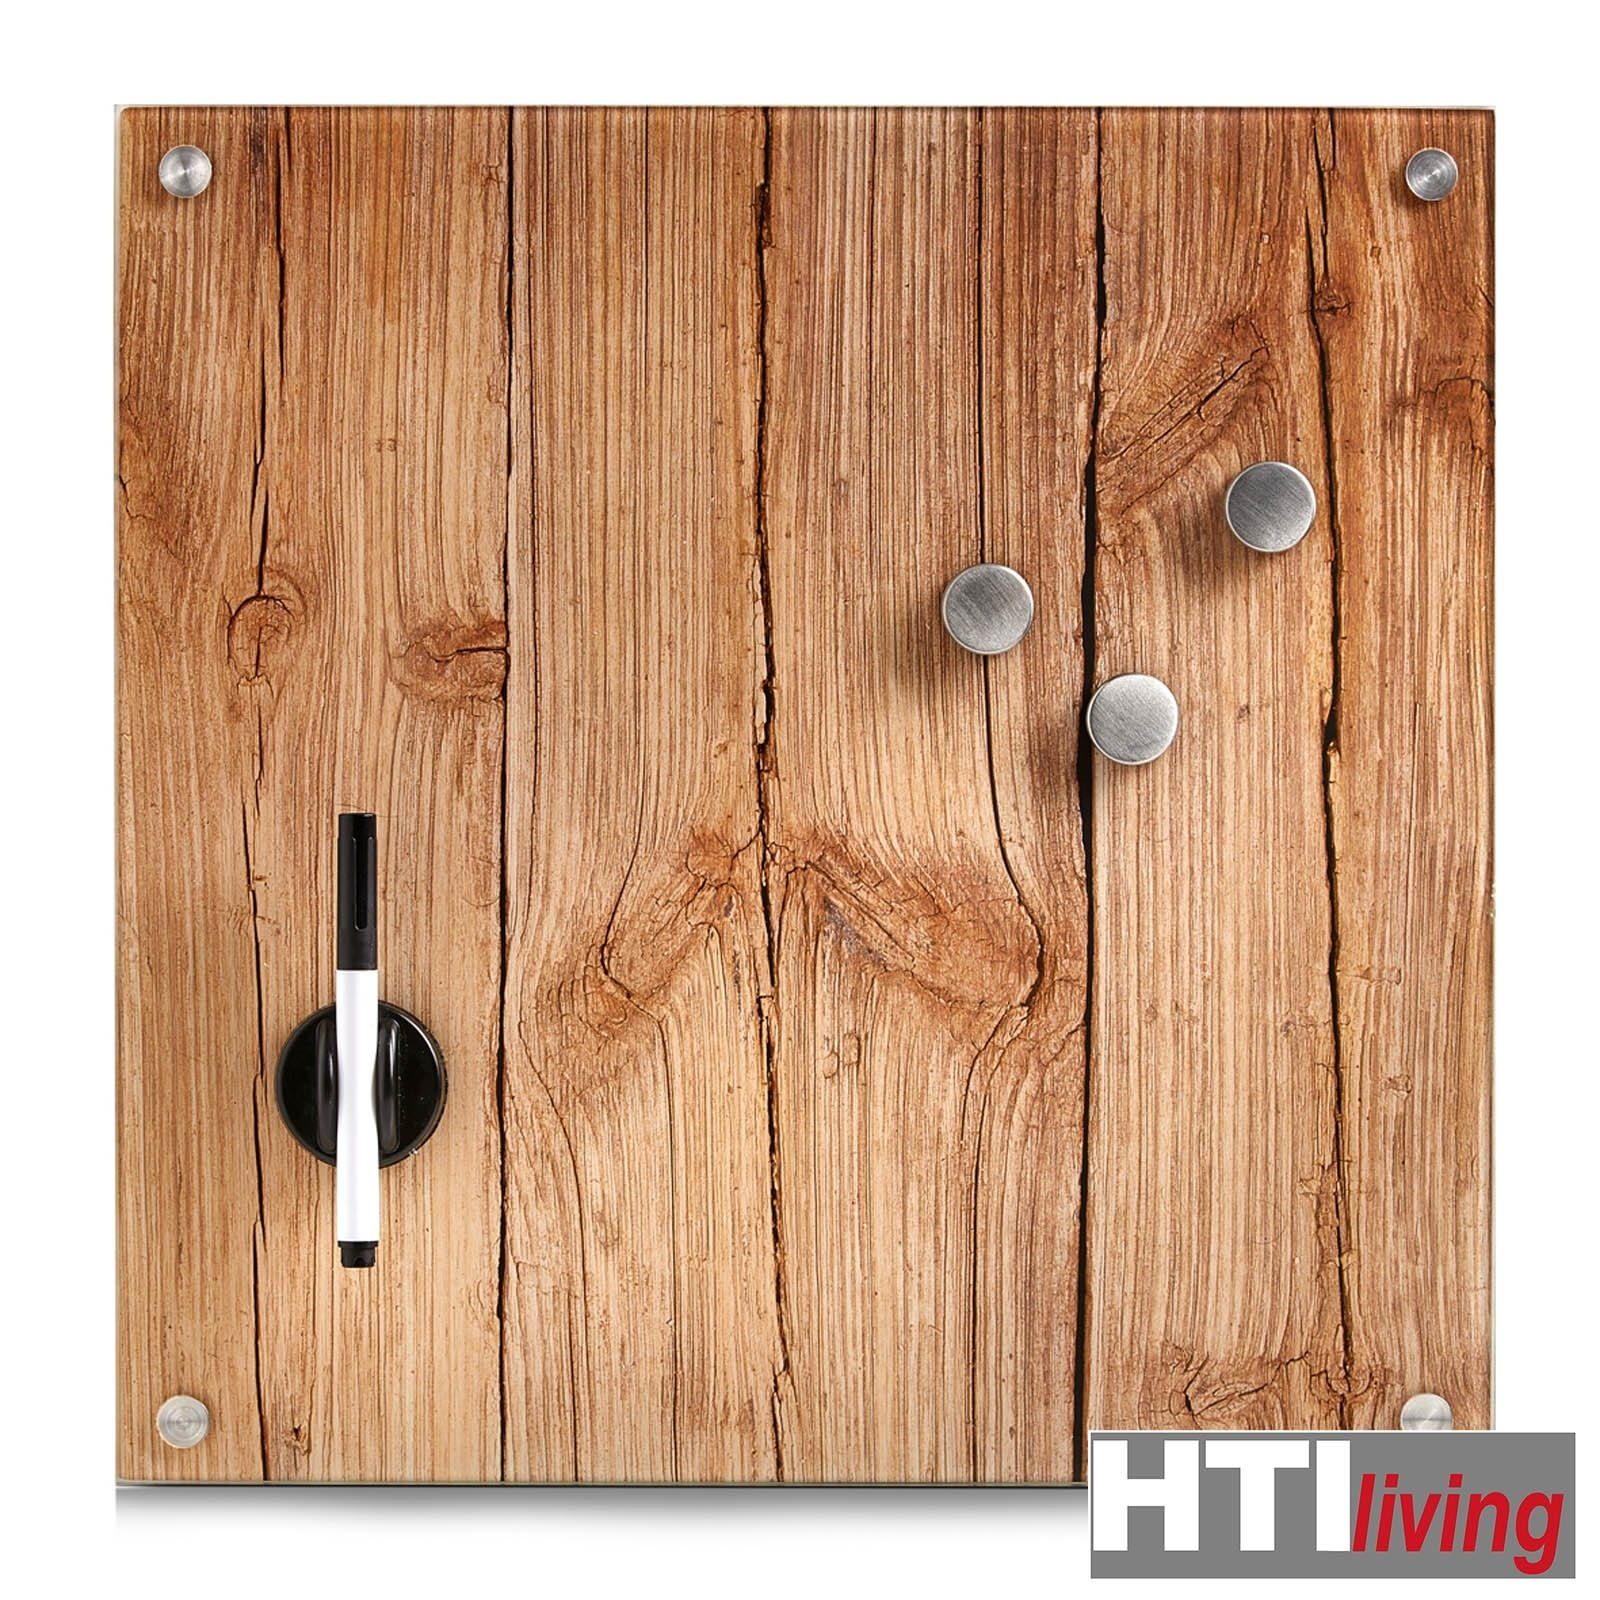 Magnetboard Pinnwand Magnettafel Memoboard Glas Schreibtafel Schreibboard Wood, HTI-Living Memoboard